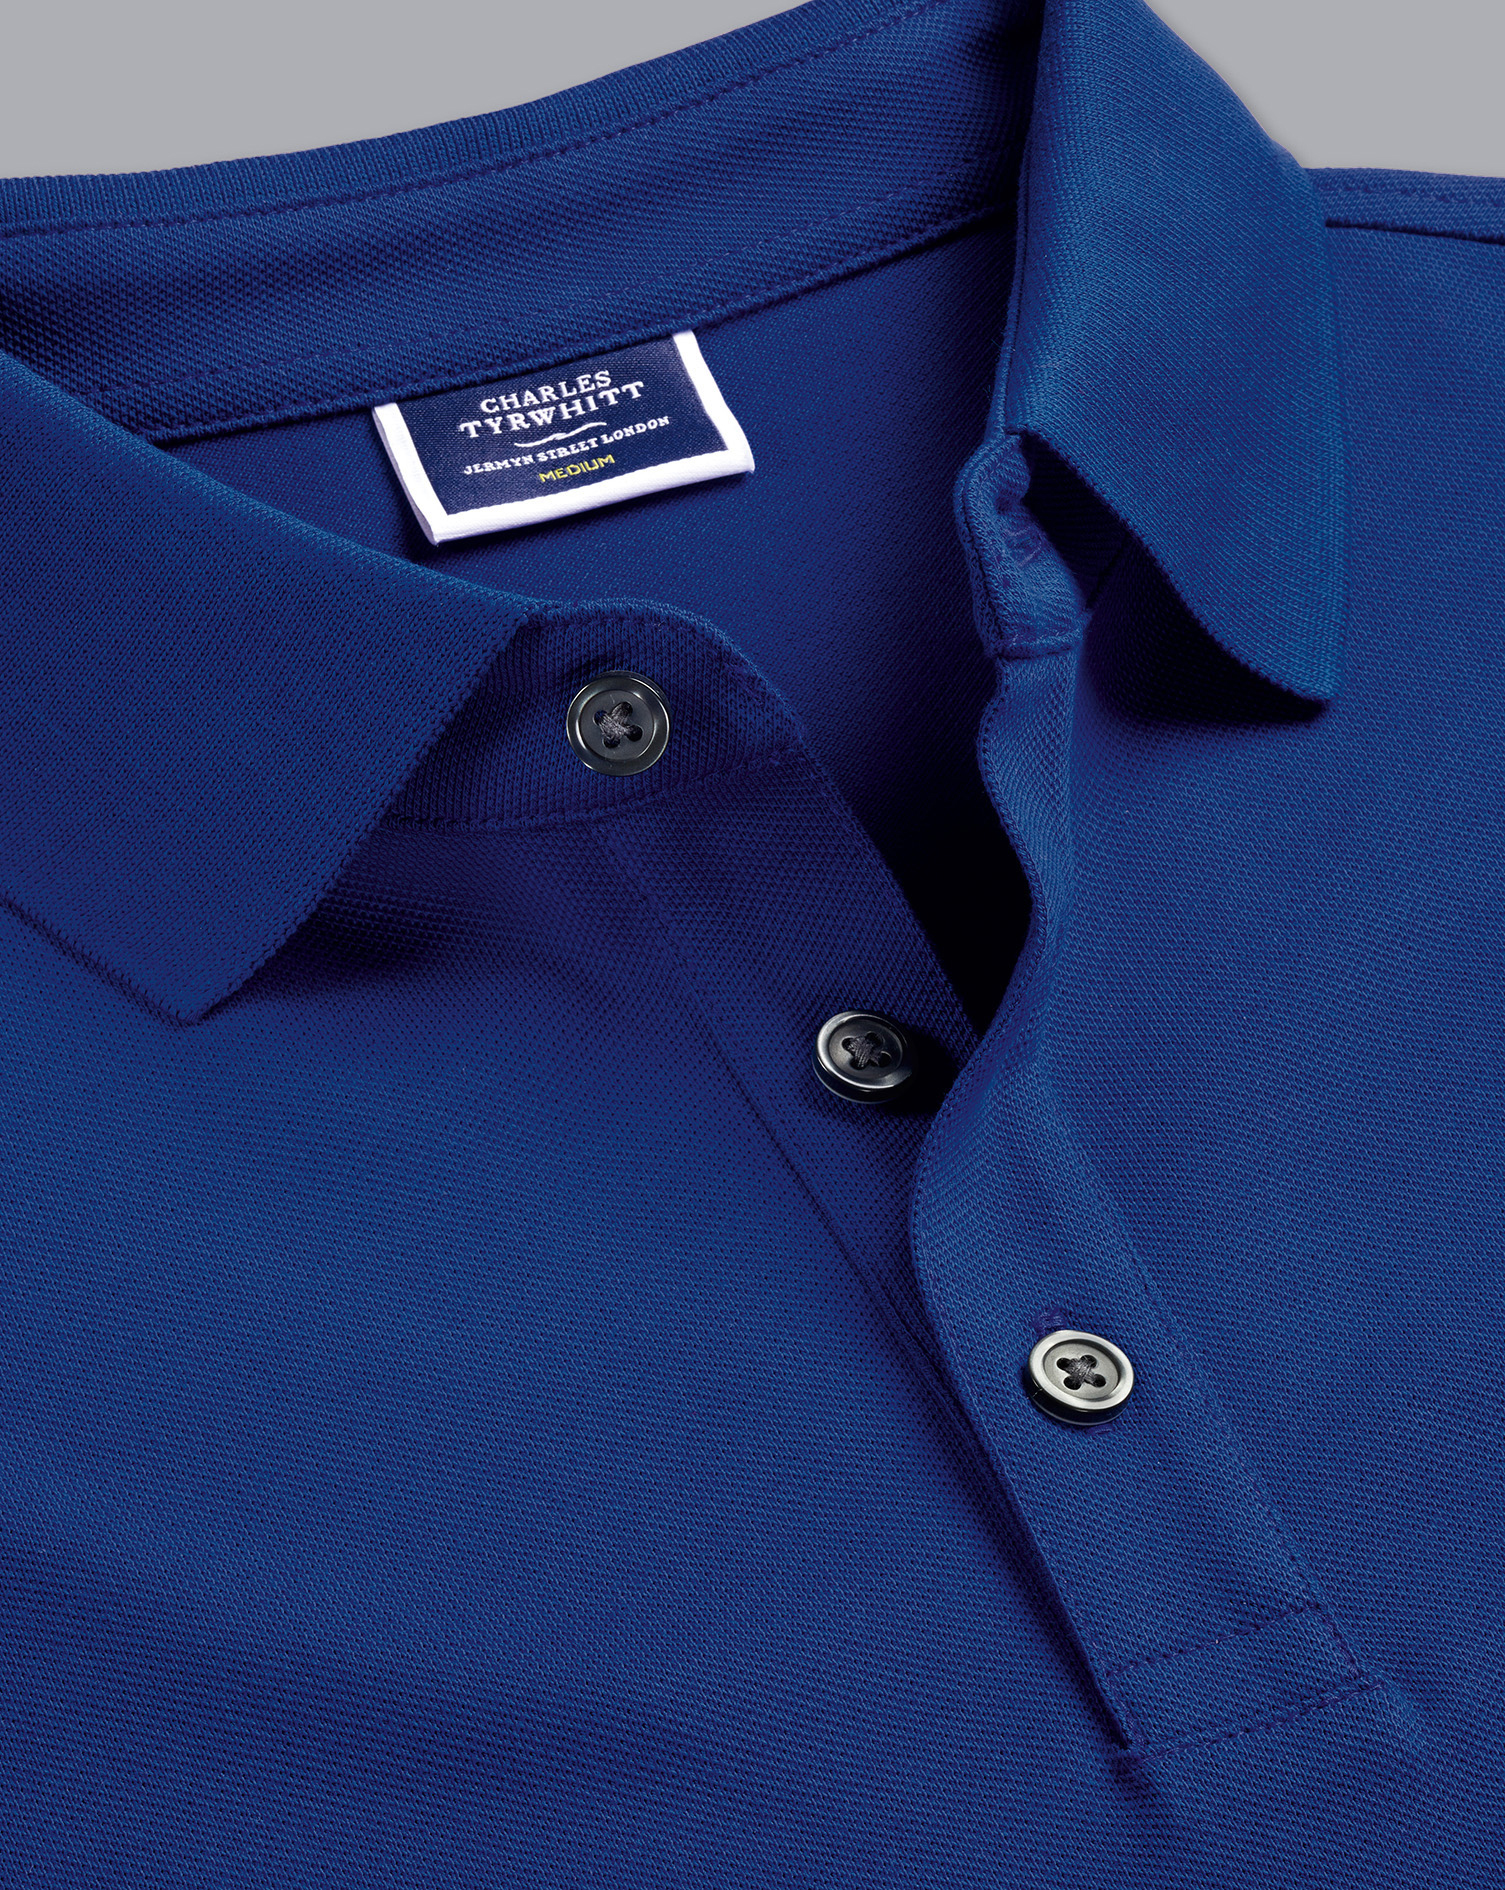 Men's Charles Tyrwhitt Pique Polo Shirt - Royal Blue Size Small
